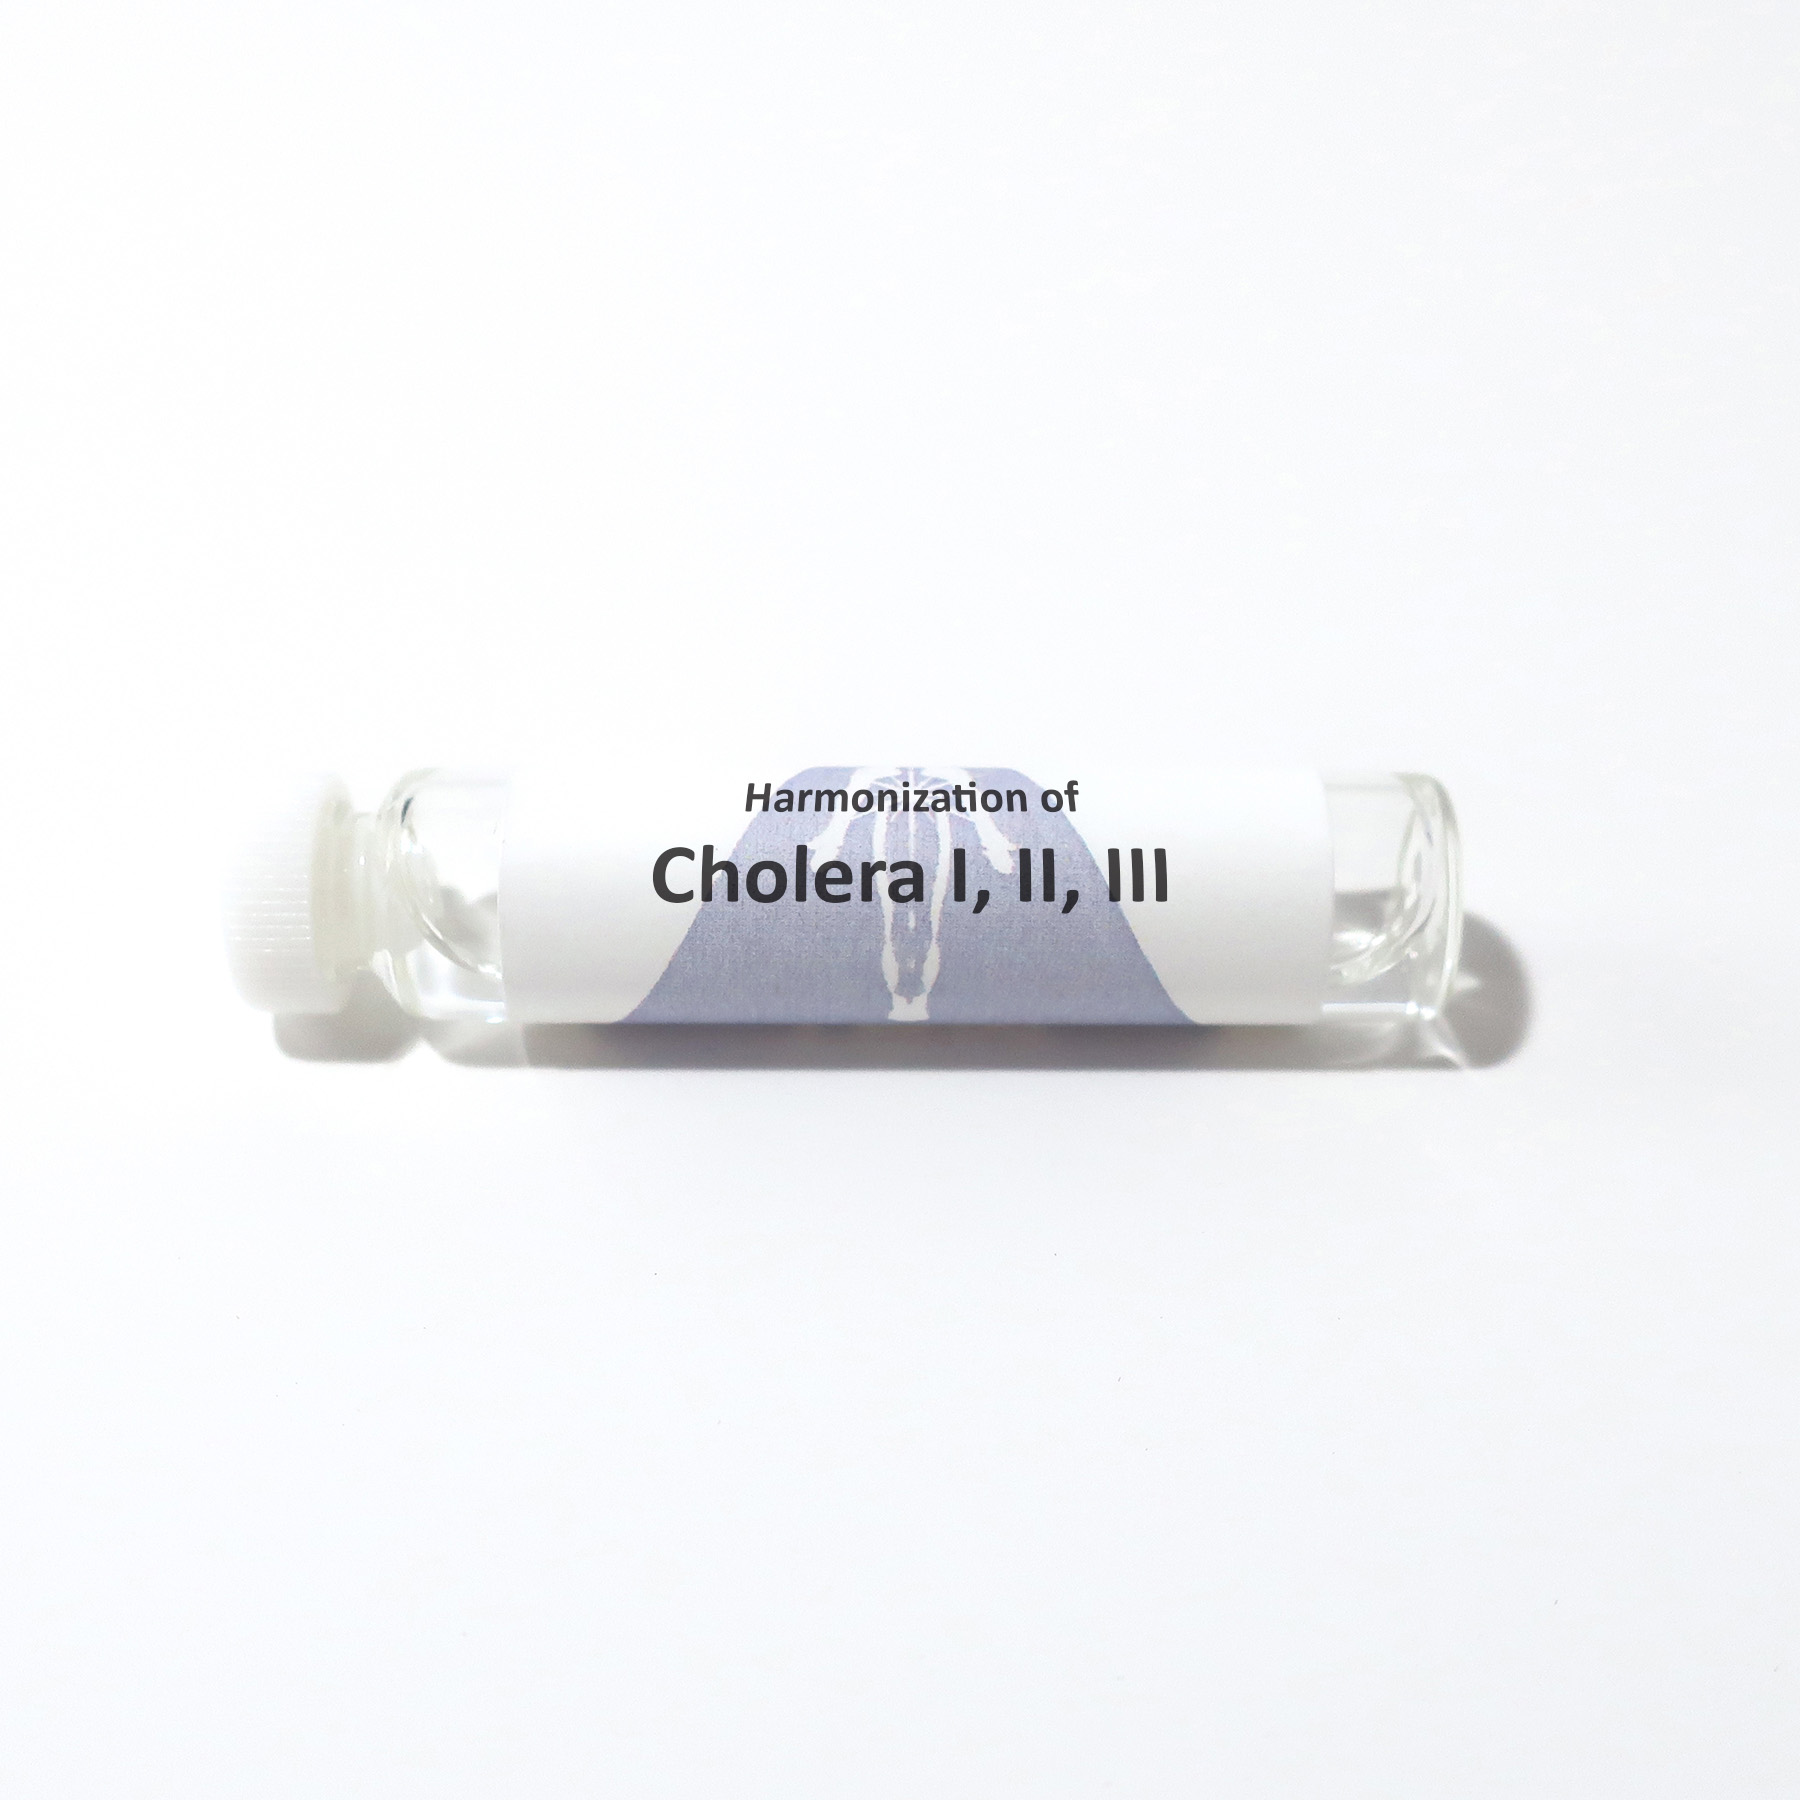 Cholera I, II, III